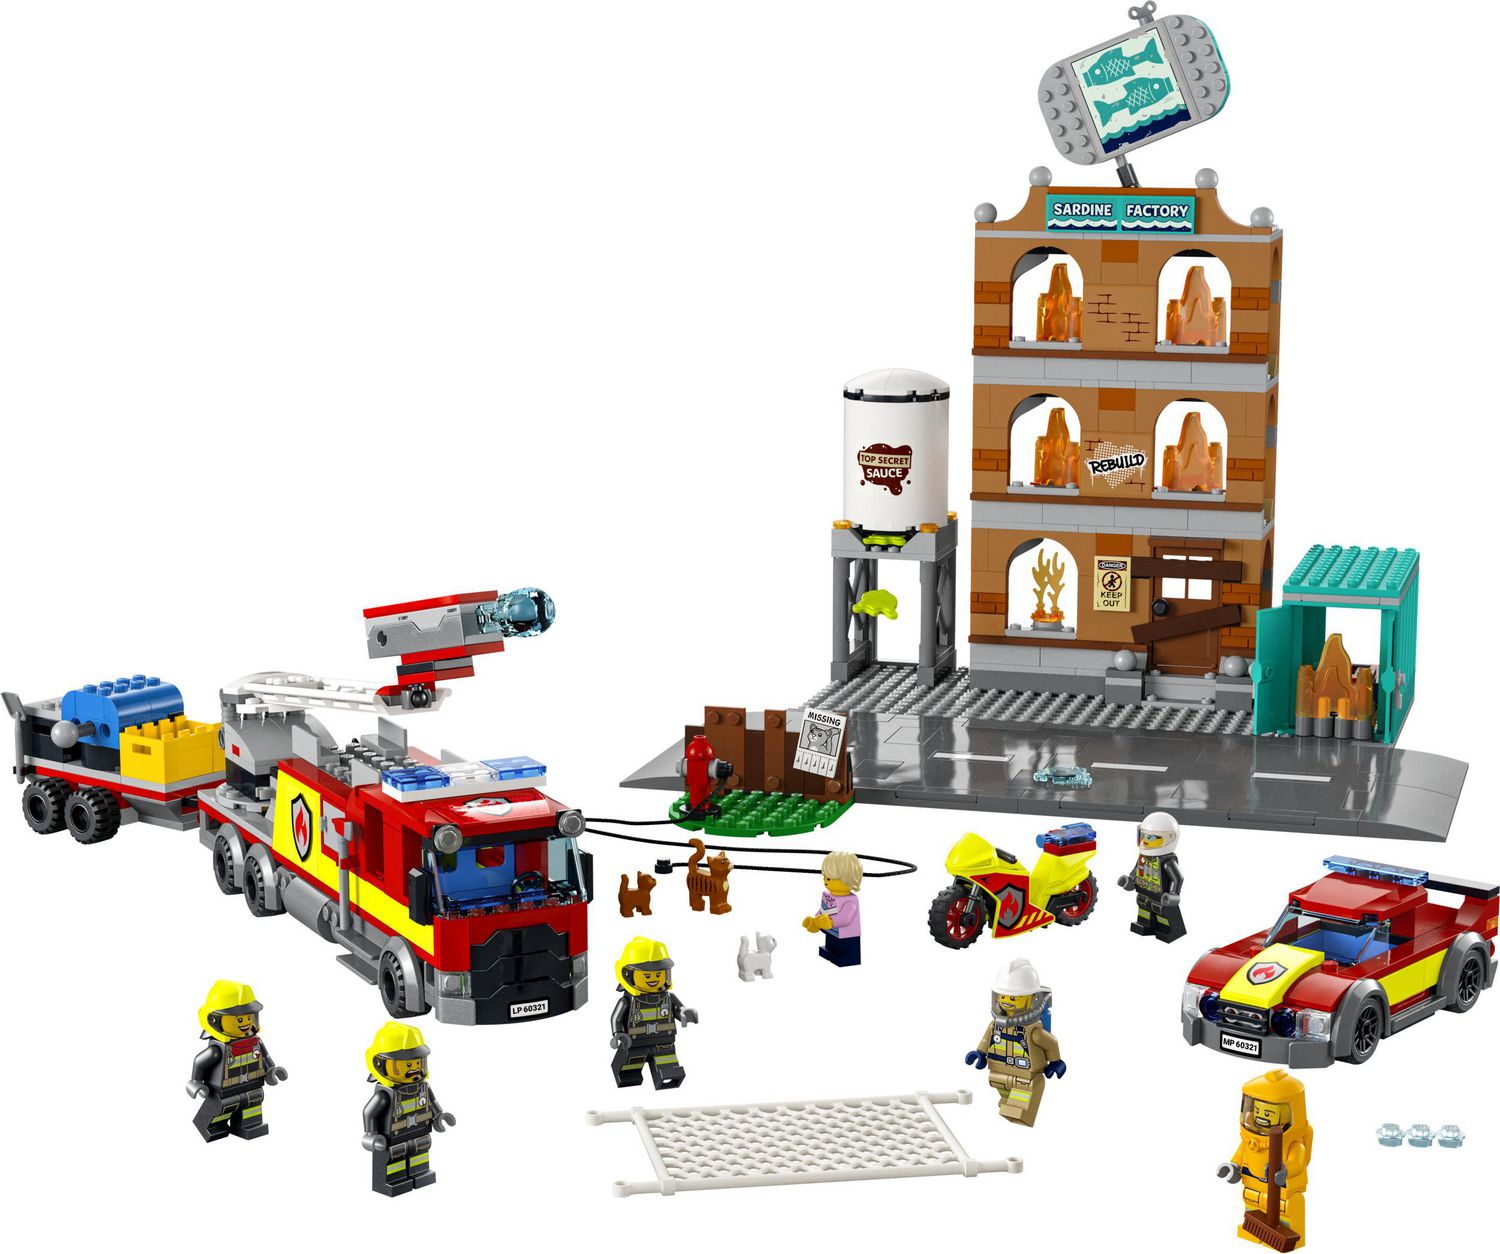 LEGO City Fire Brigade 60321 Toy Building Kit (766 Pieces